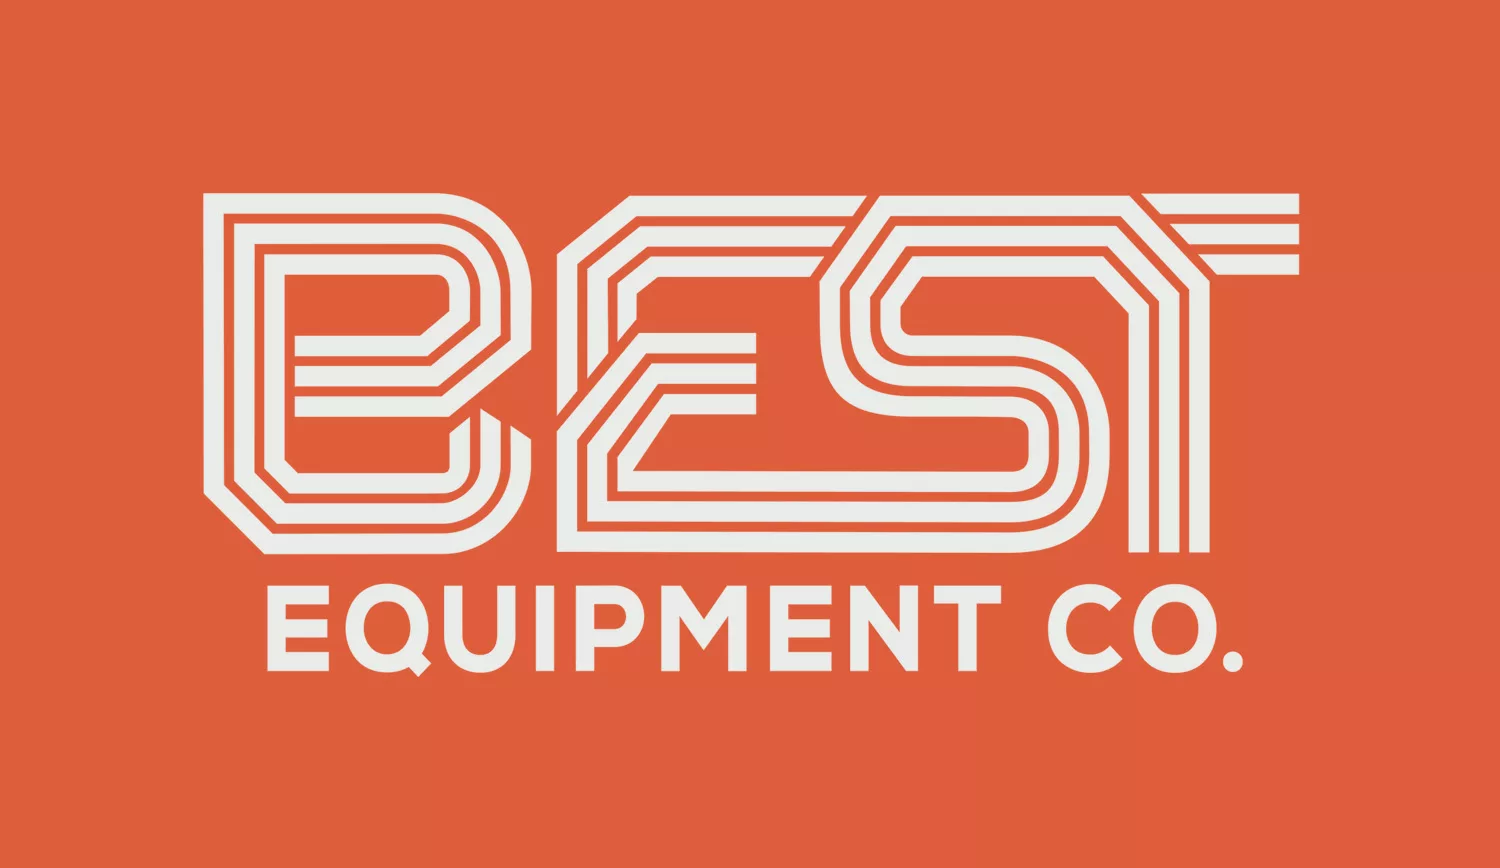 Best Equipment Co. Announces New Headquarters